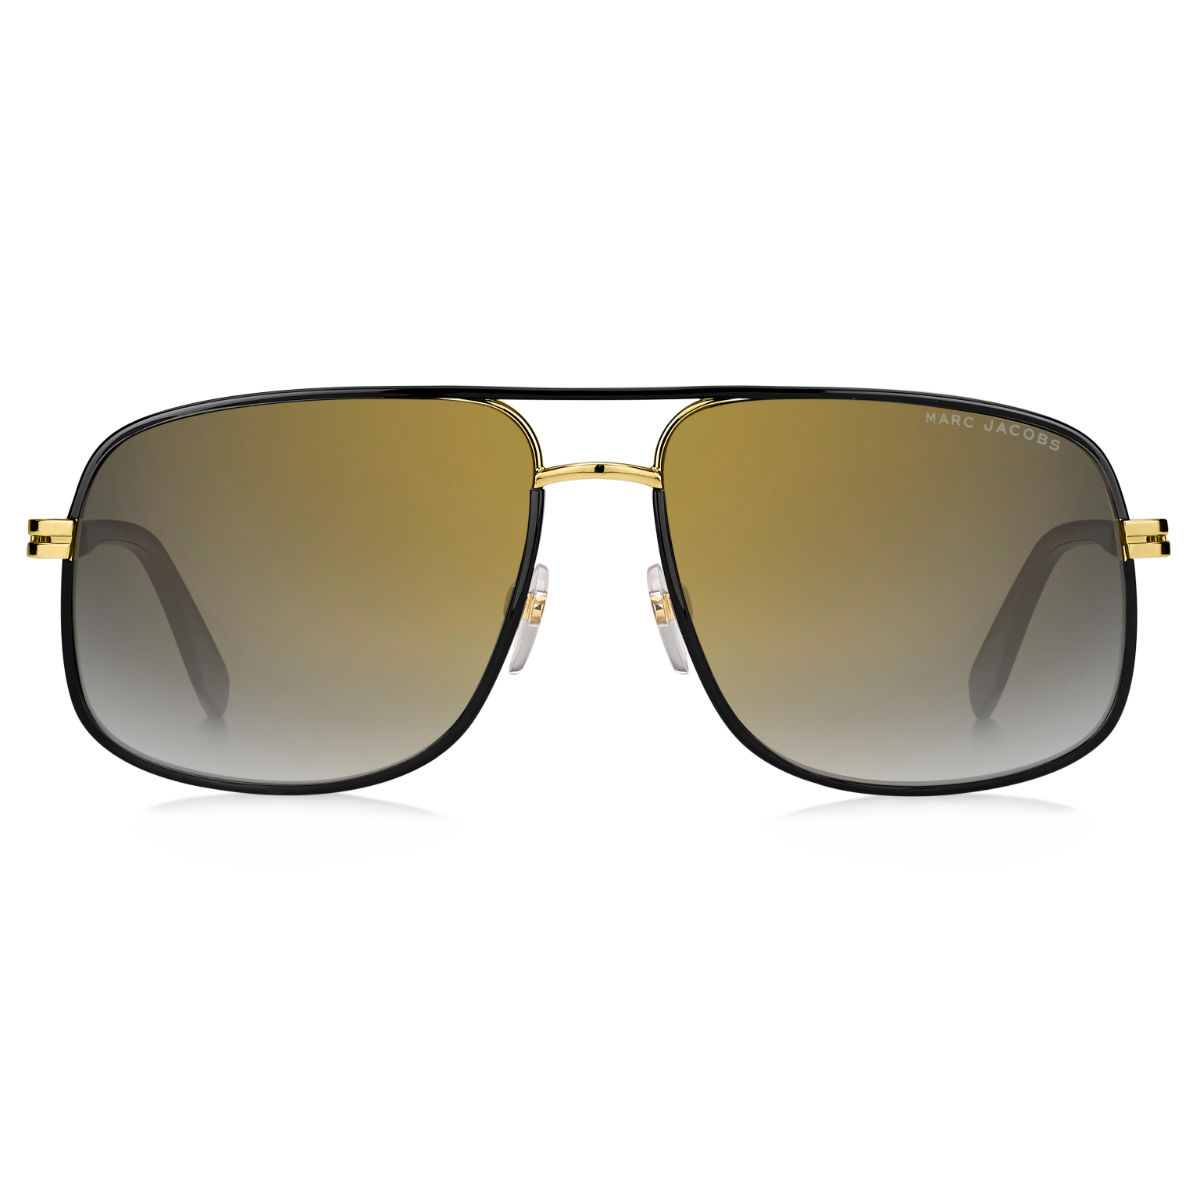 Marc Jacobs Sunglasses Silver Mercury For Men – Mega Fashion